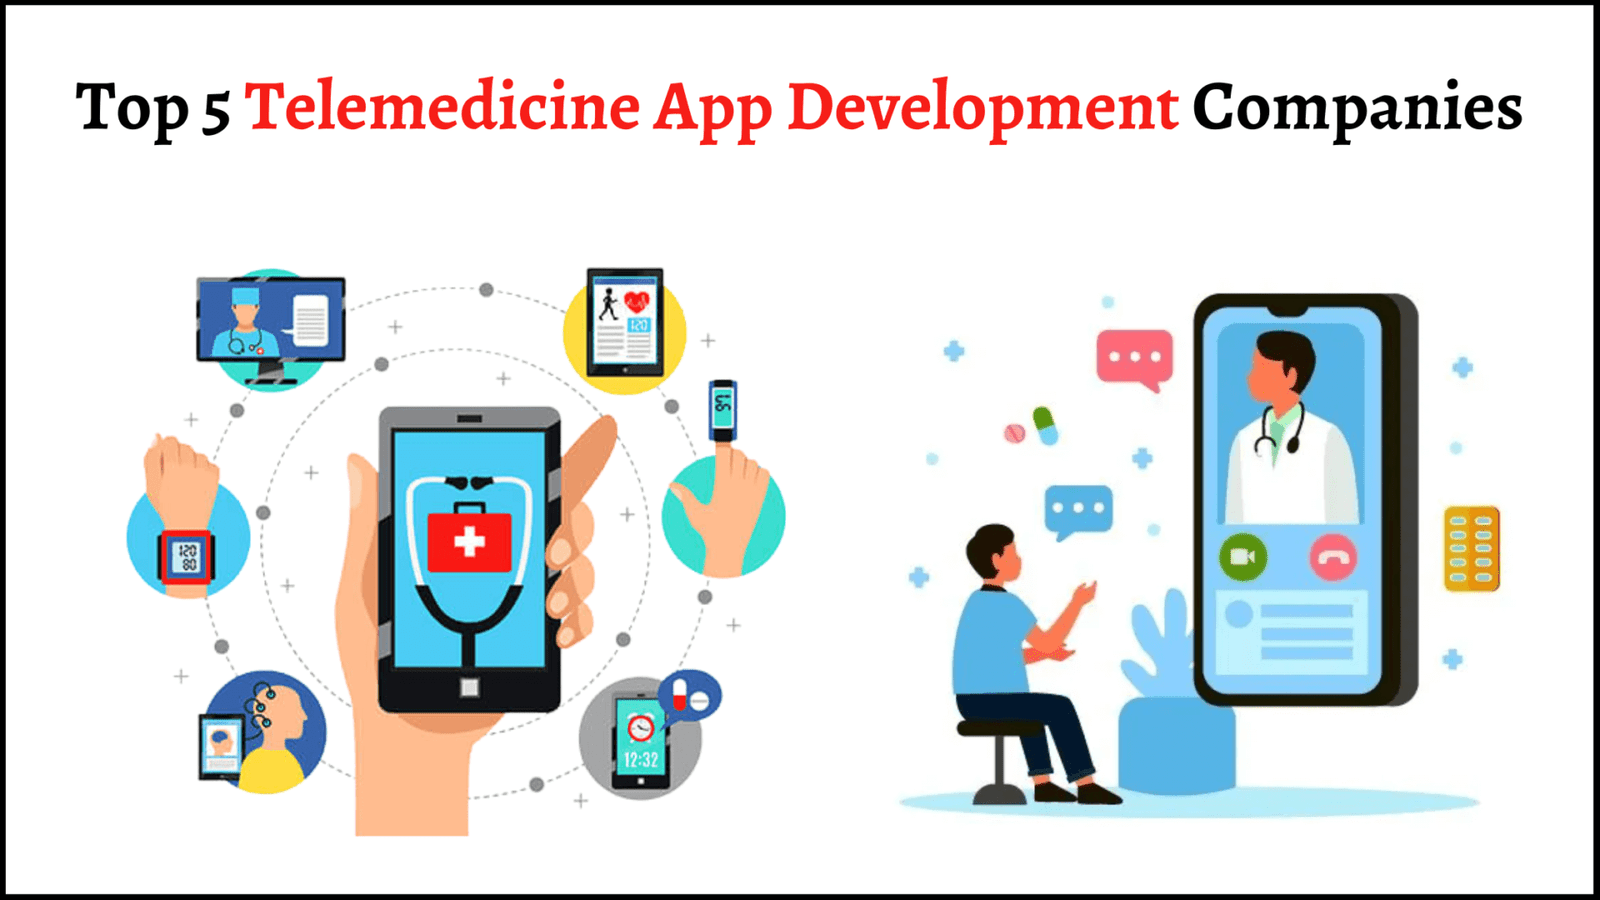 Top 5 Telemedicine App Development Companies